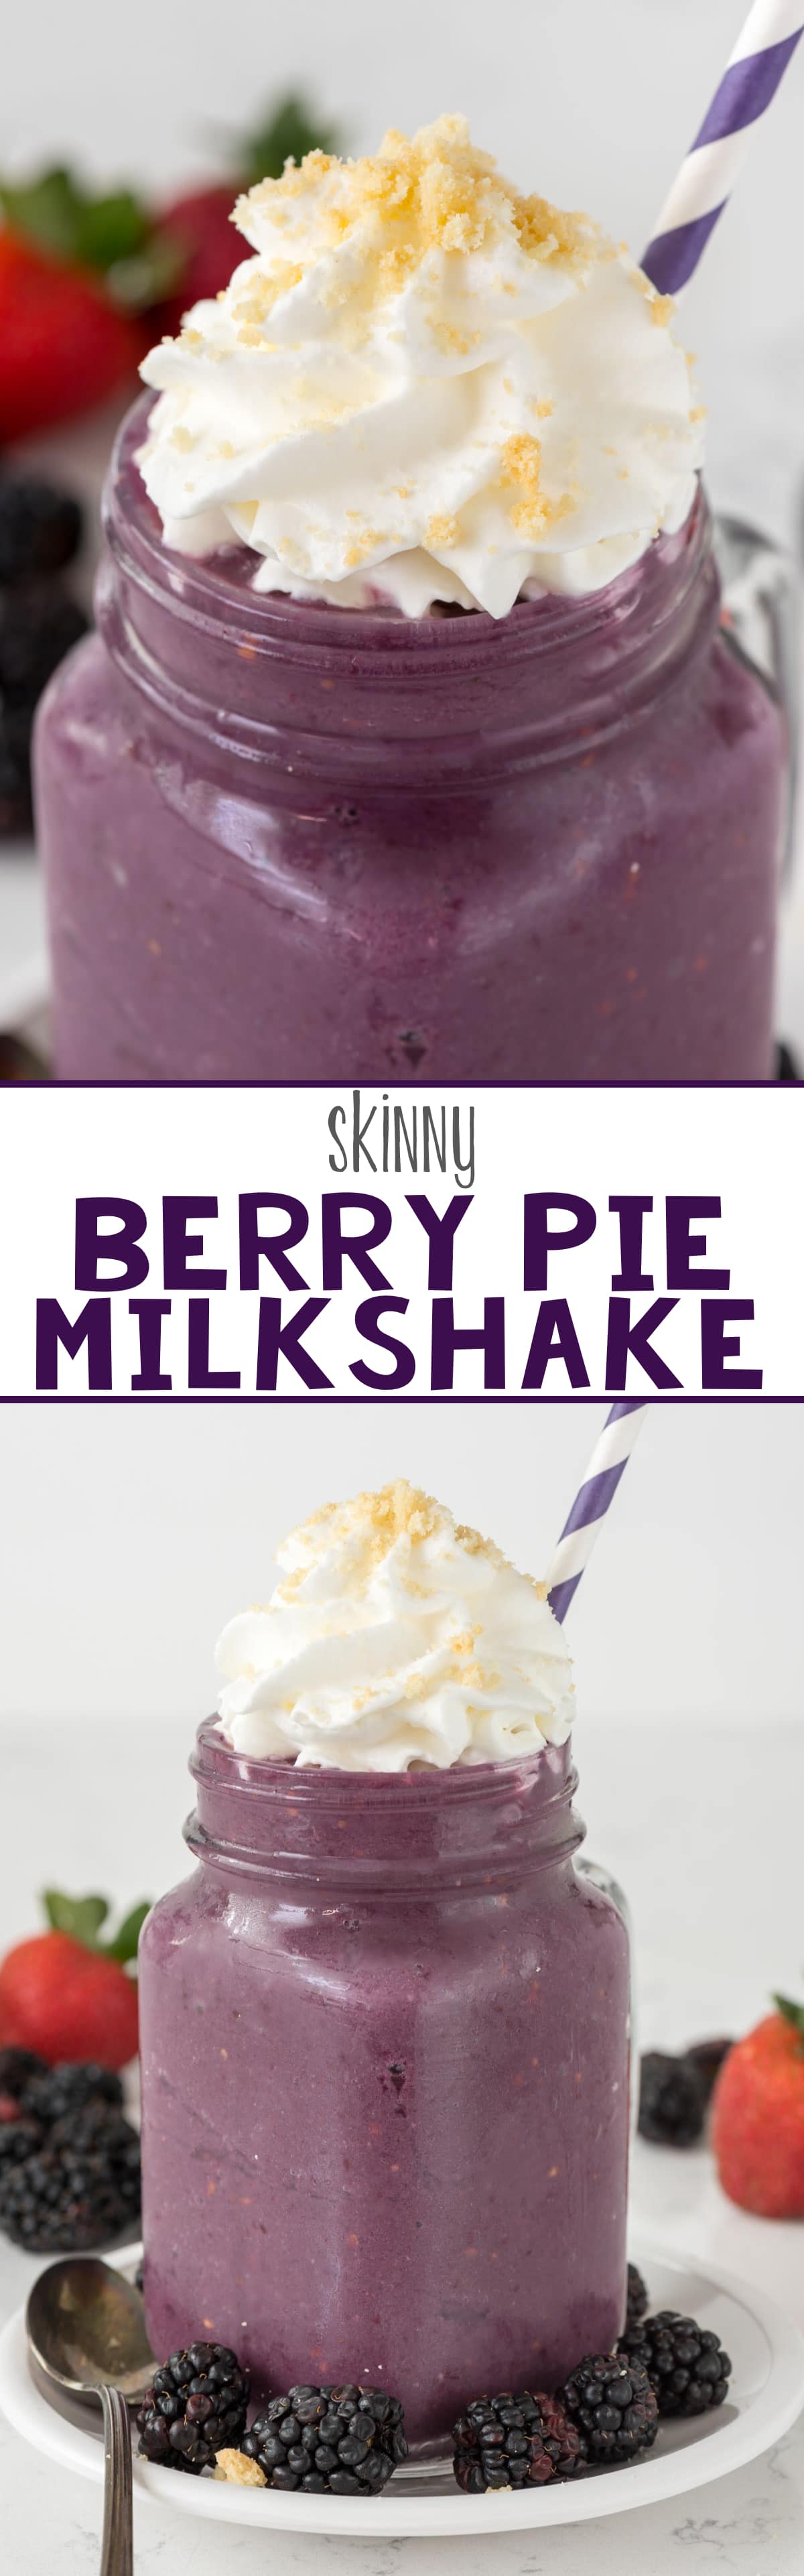 Skinny Berry Pie Milkshake - this easy recipe combines bananas and berries for a simple but healthier milkshake recipe!